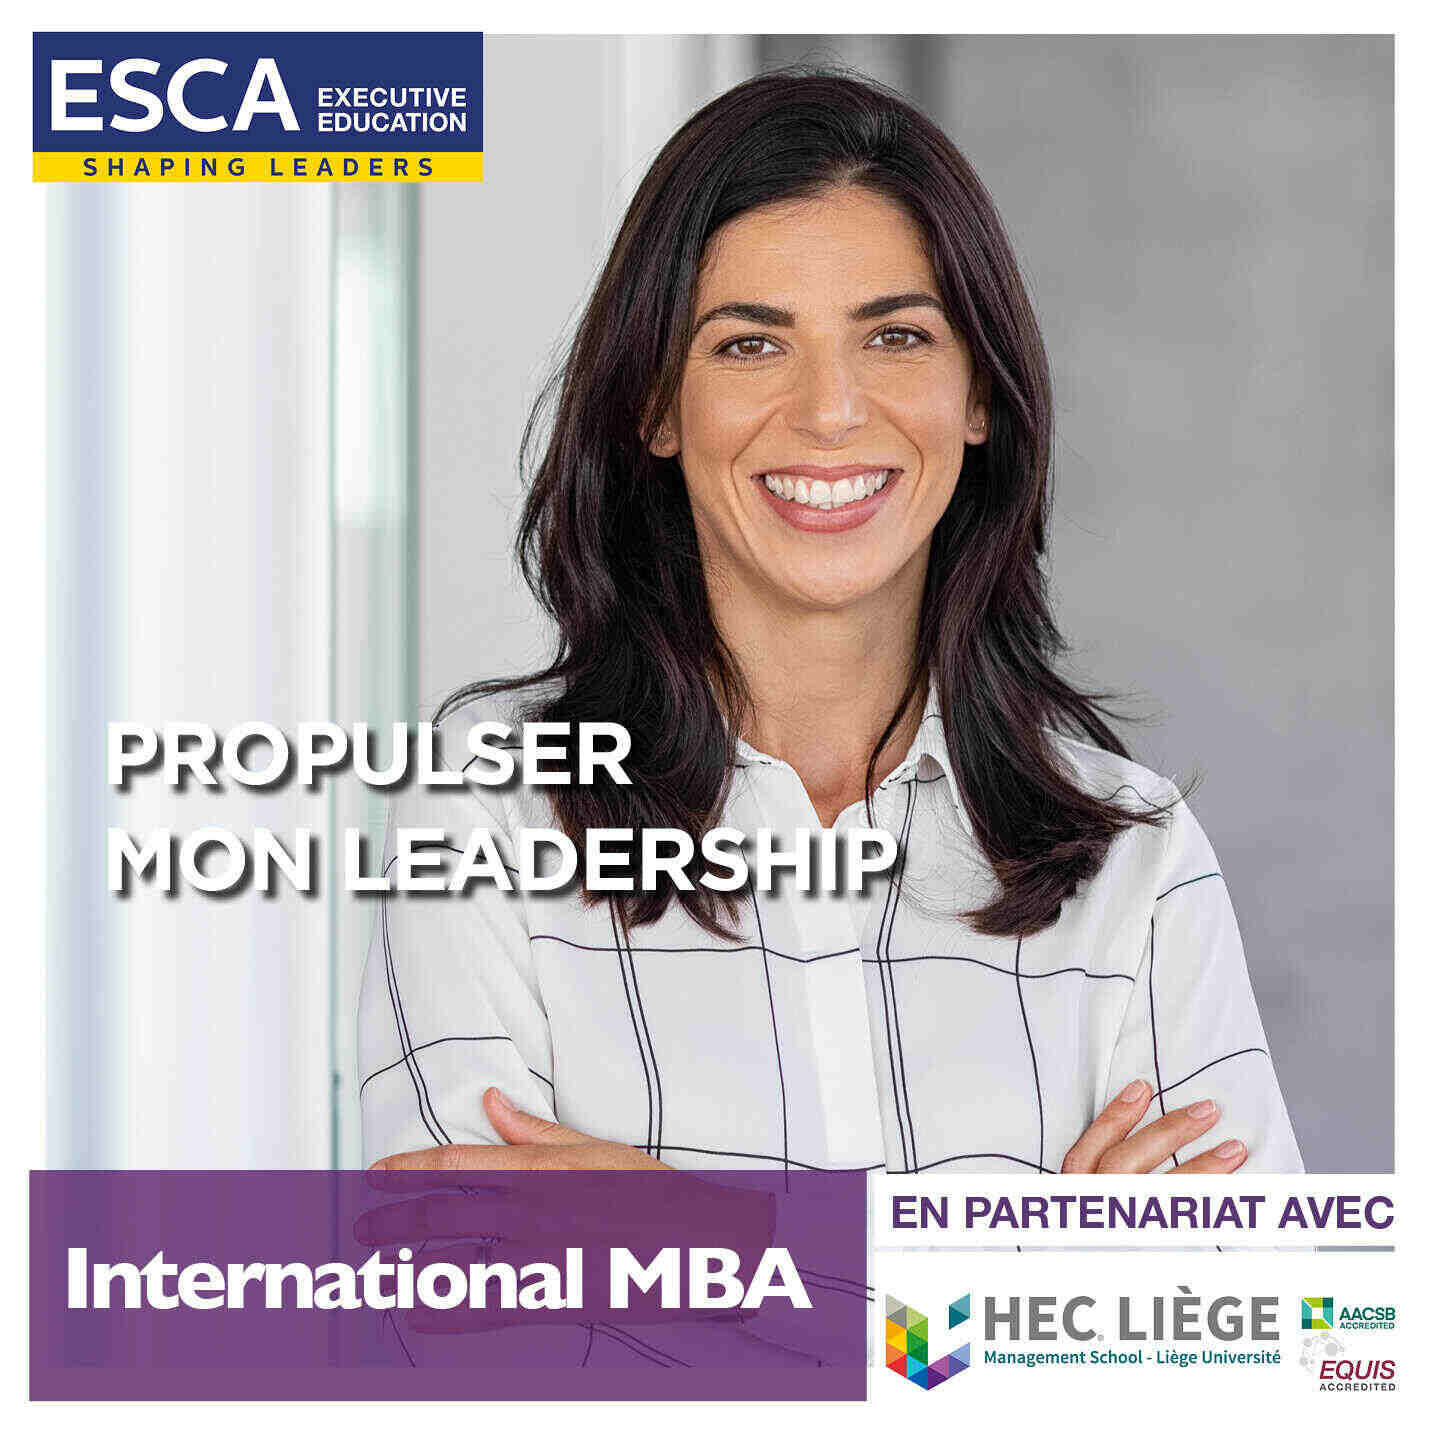 esca-executive-education-mba-hec-liege